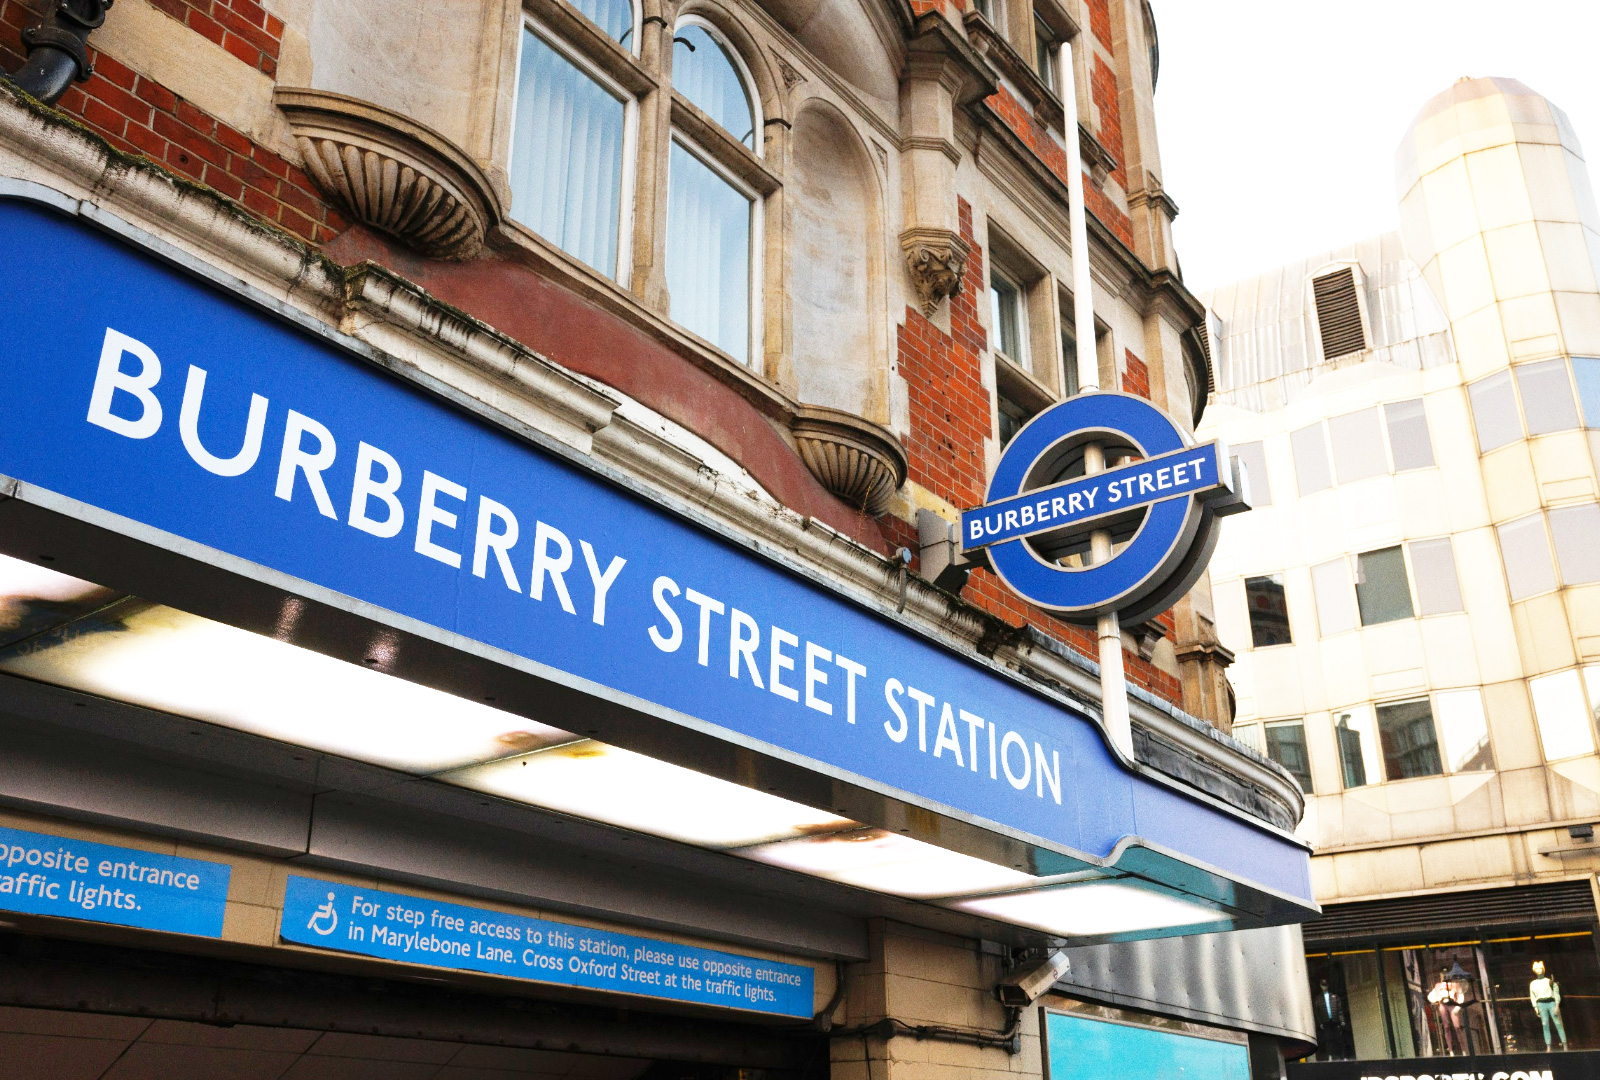 Burberry Street rebranded entrance fascia and roundel at Bond Street station